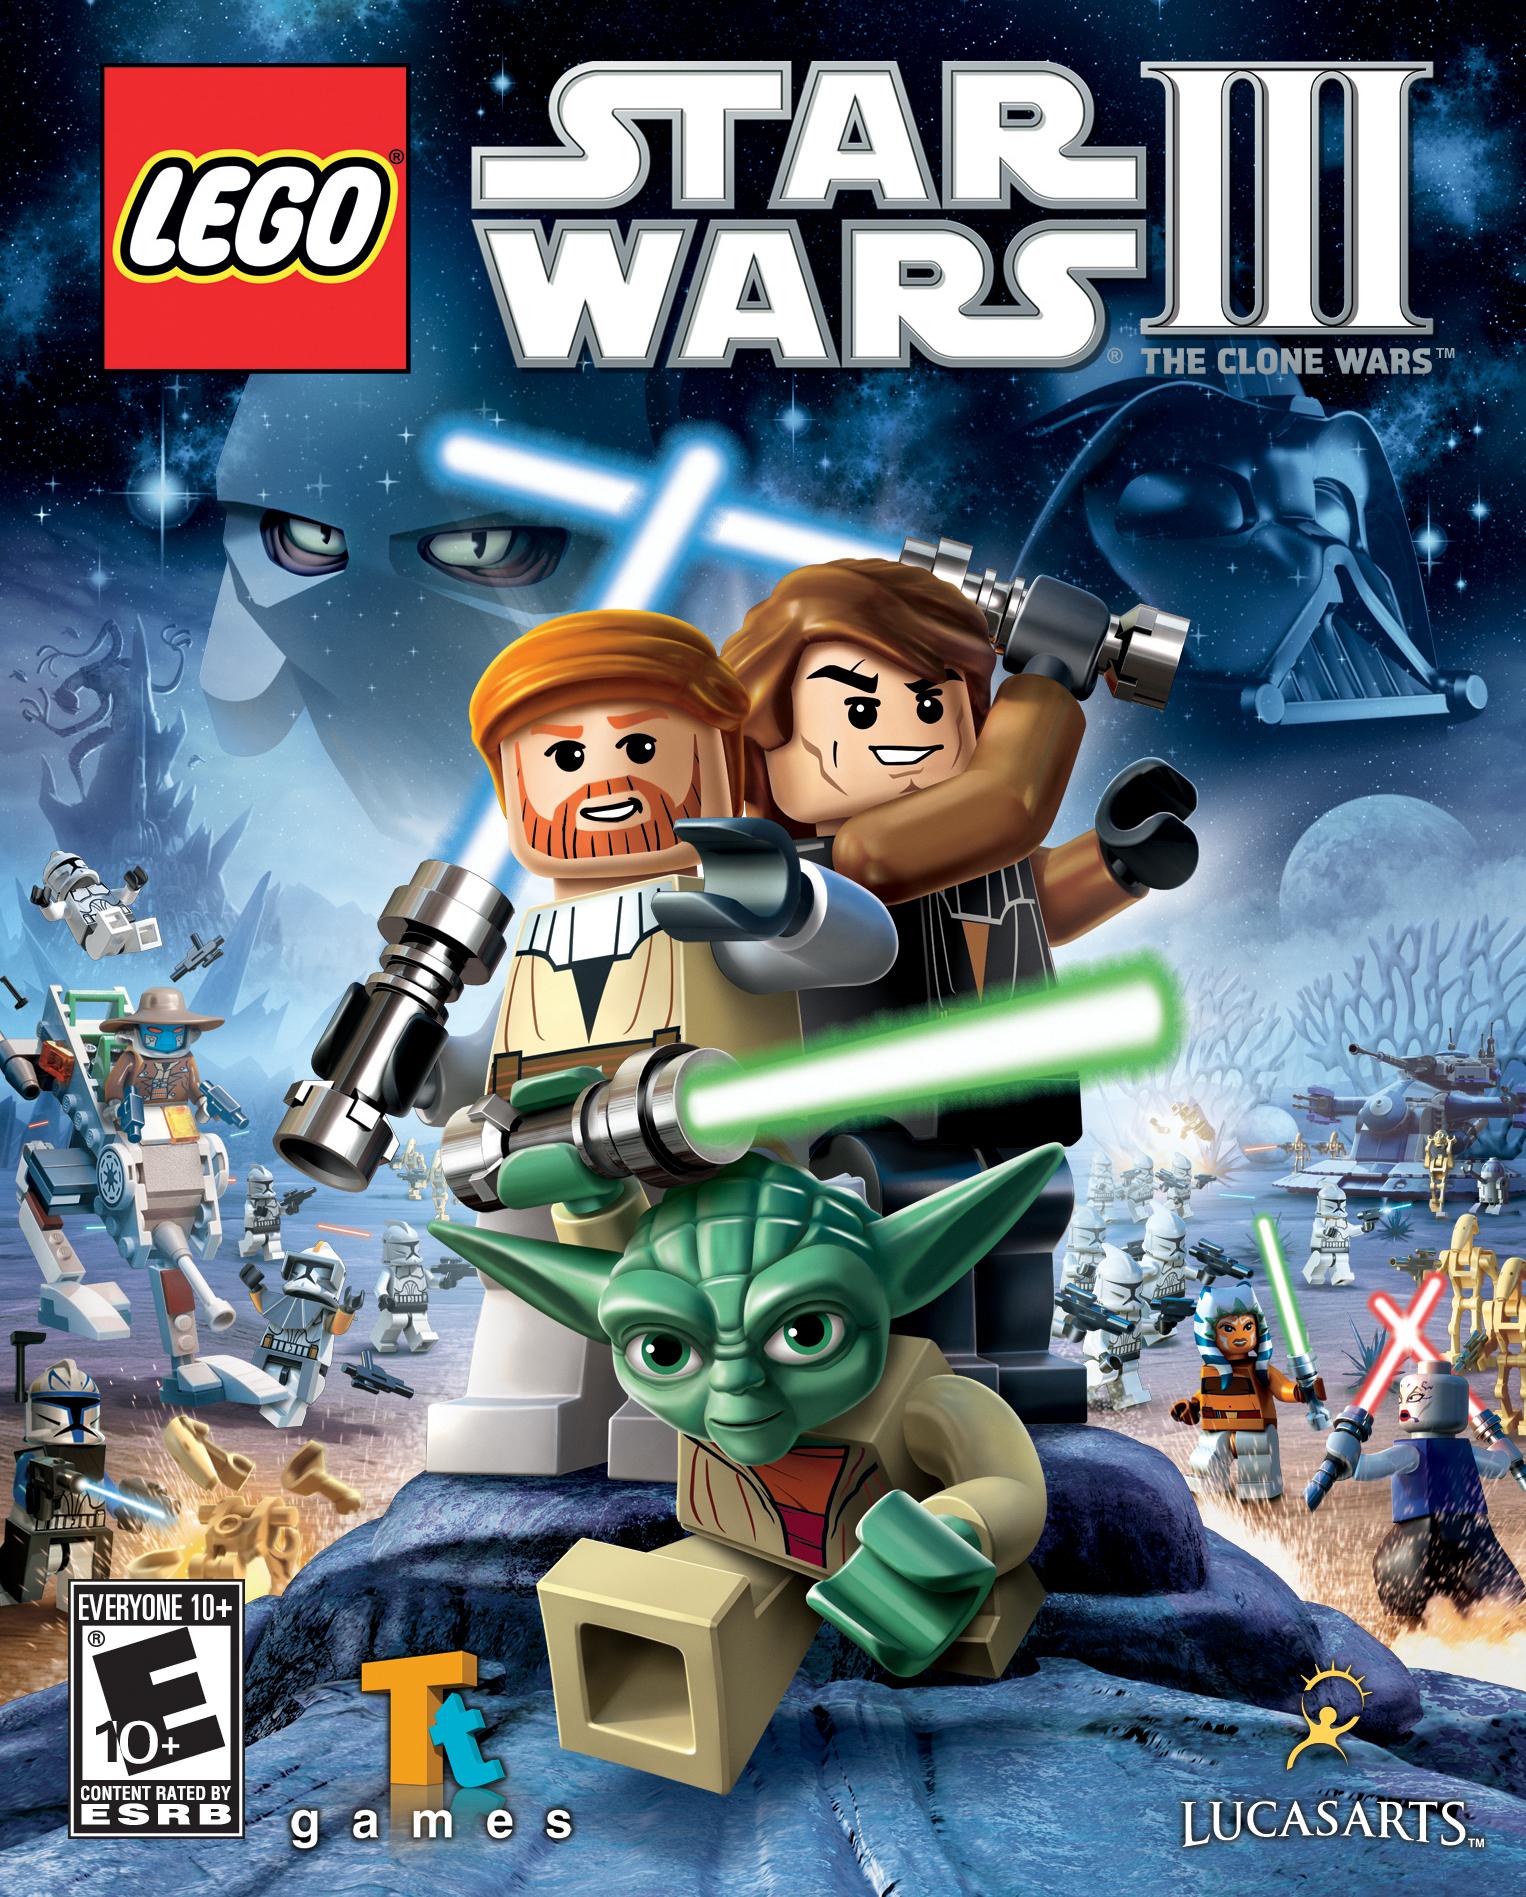 Plik:Lego Star Wars 3.jpg